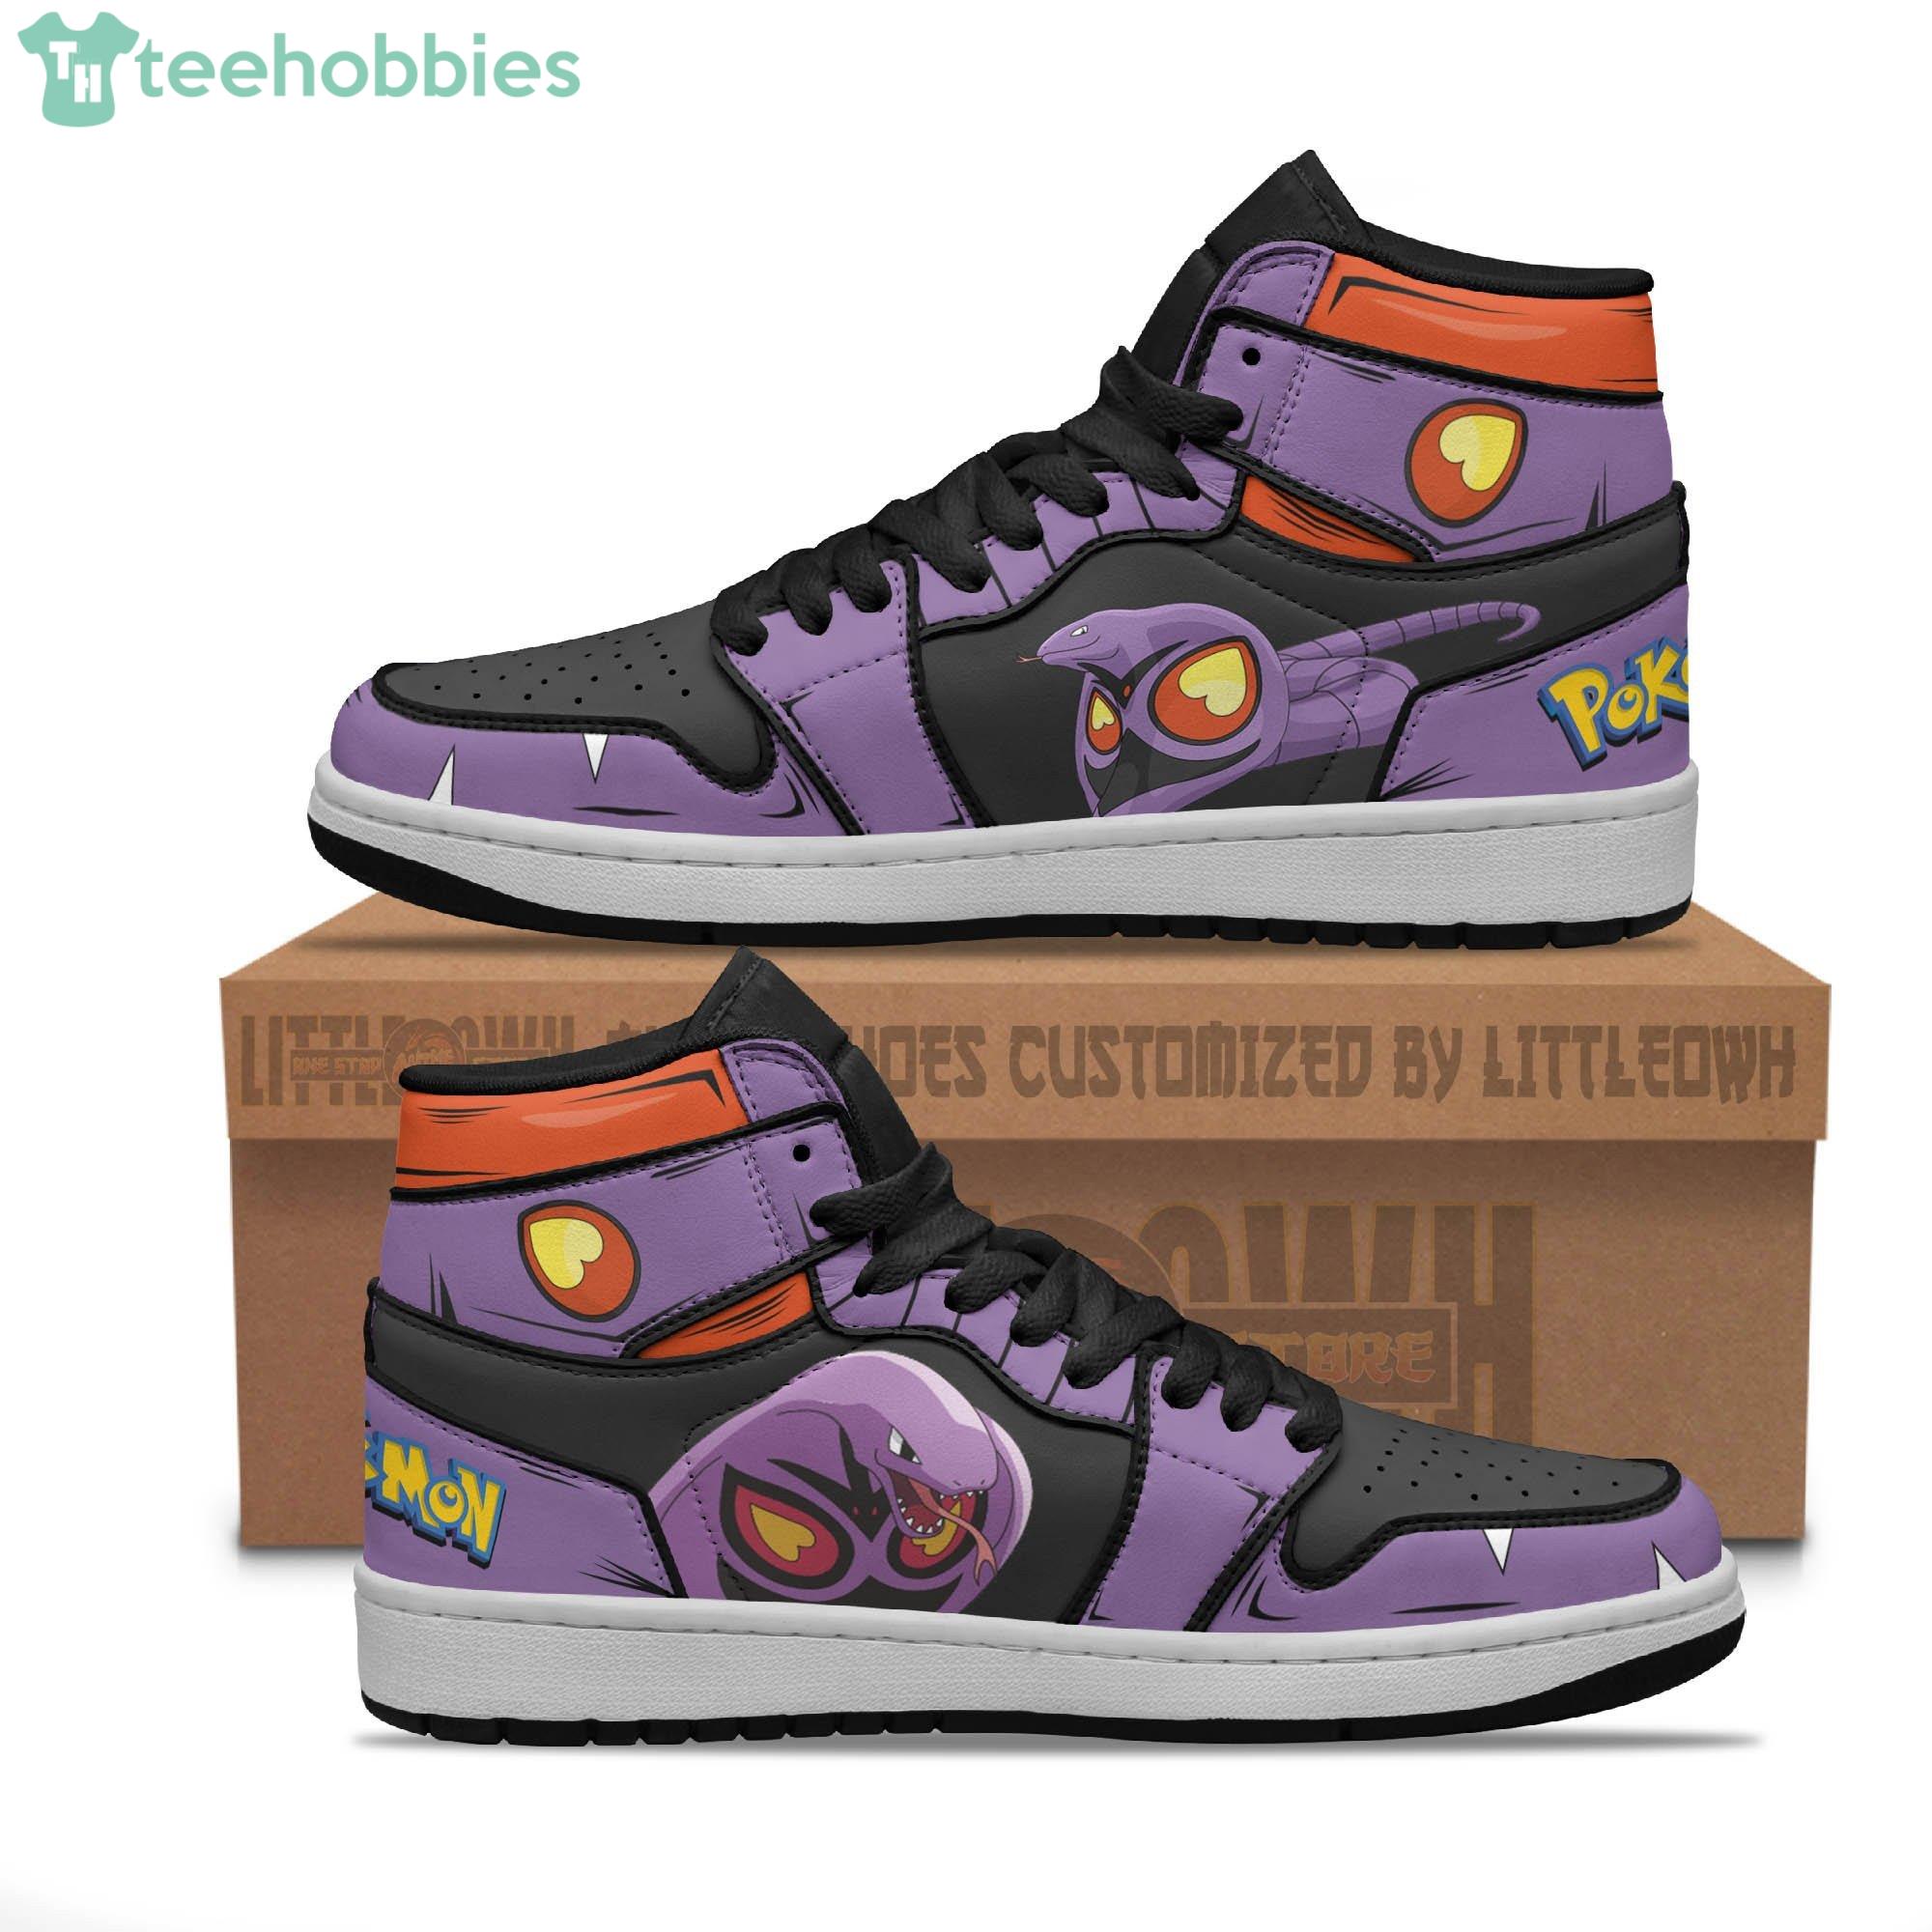 Arbok Air Jordan Hightop Shoes Pokemon Anime Product Photo 1 Product photo 1